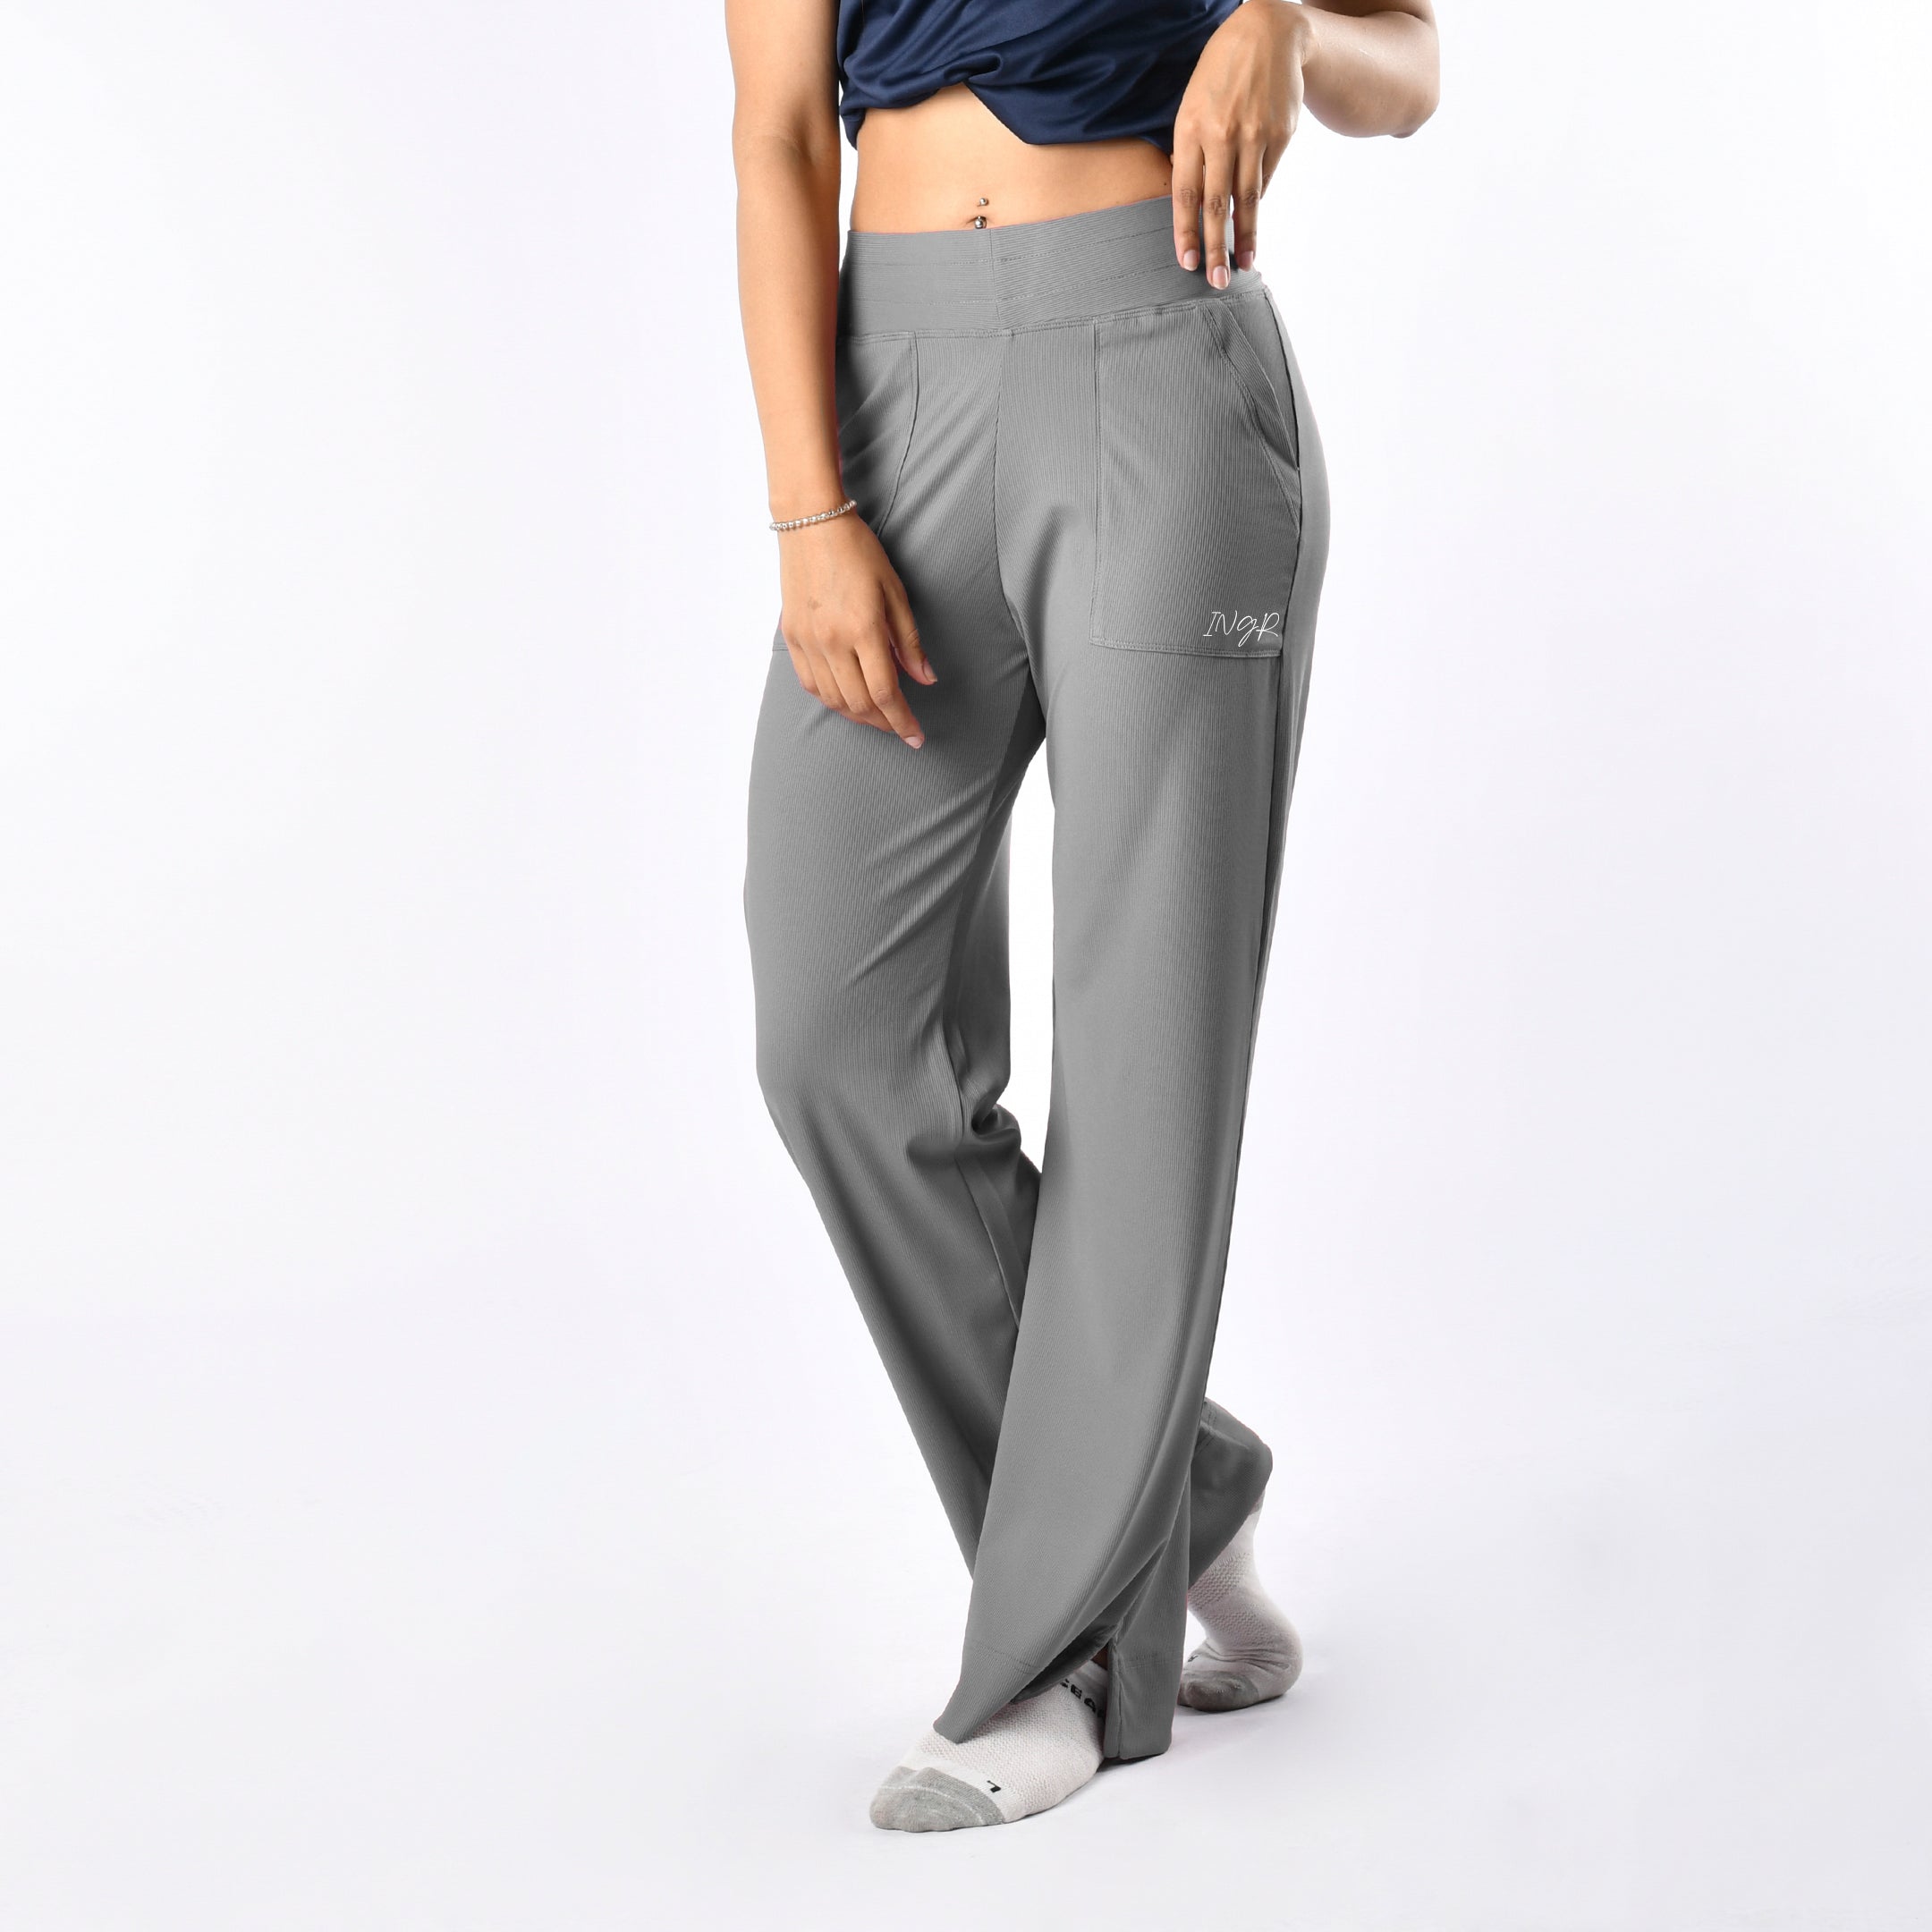  Womens Yoga Pants with Split High Waist 4 Way Stretch